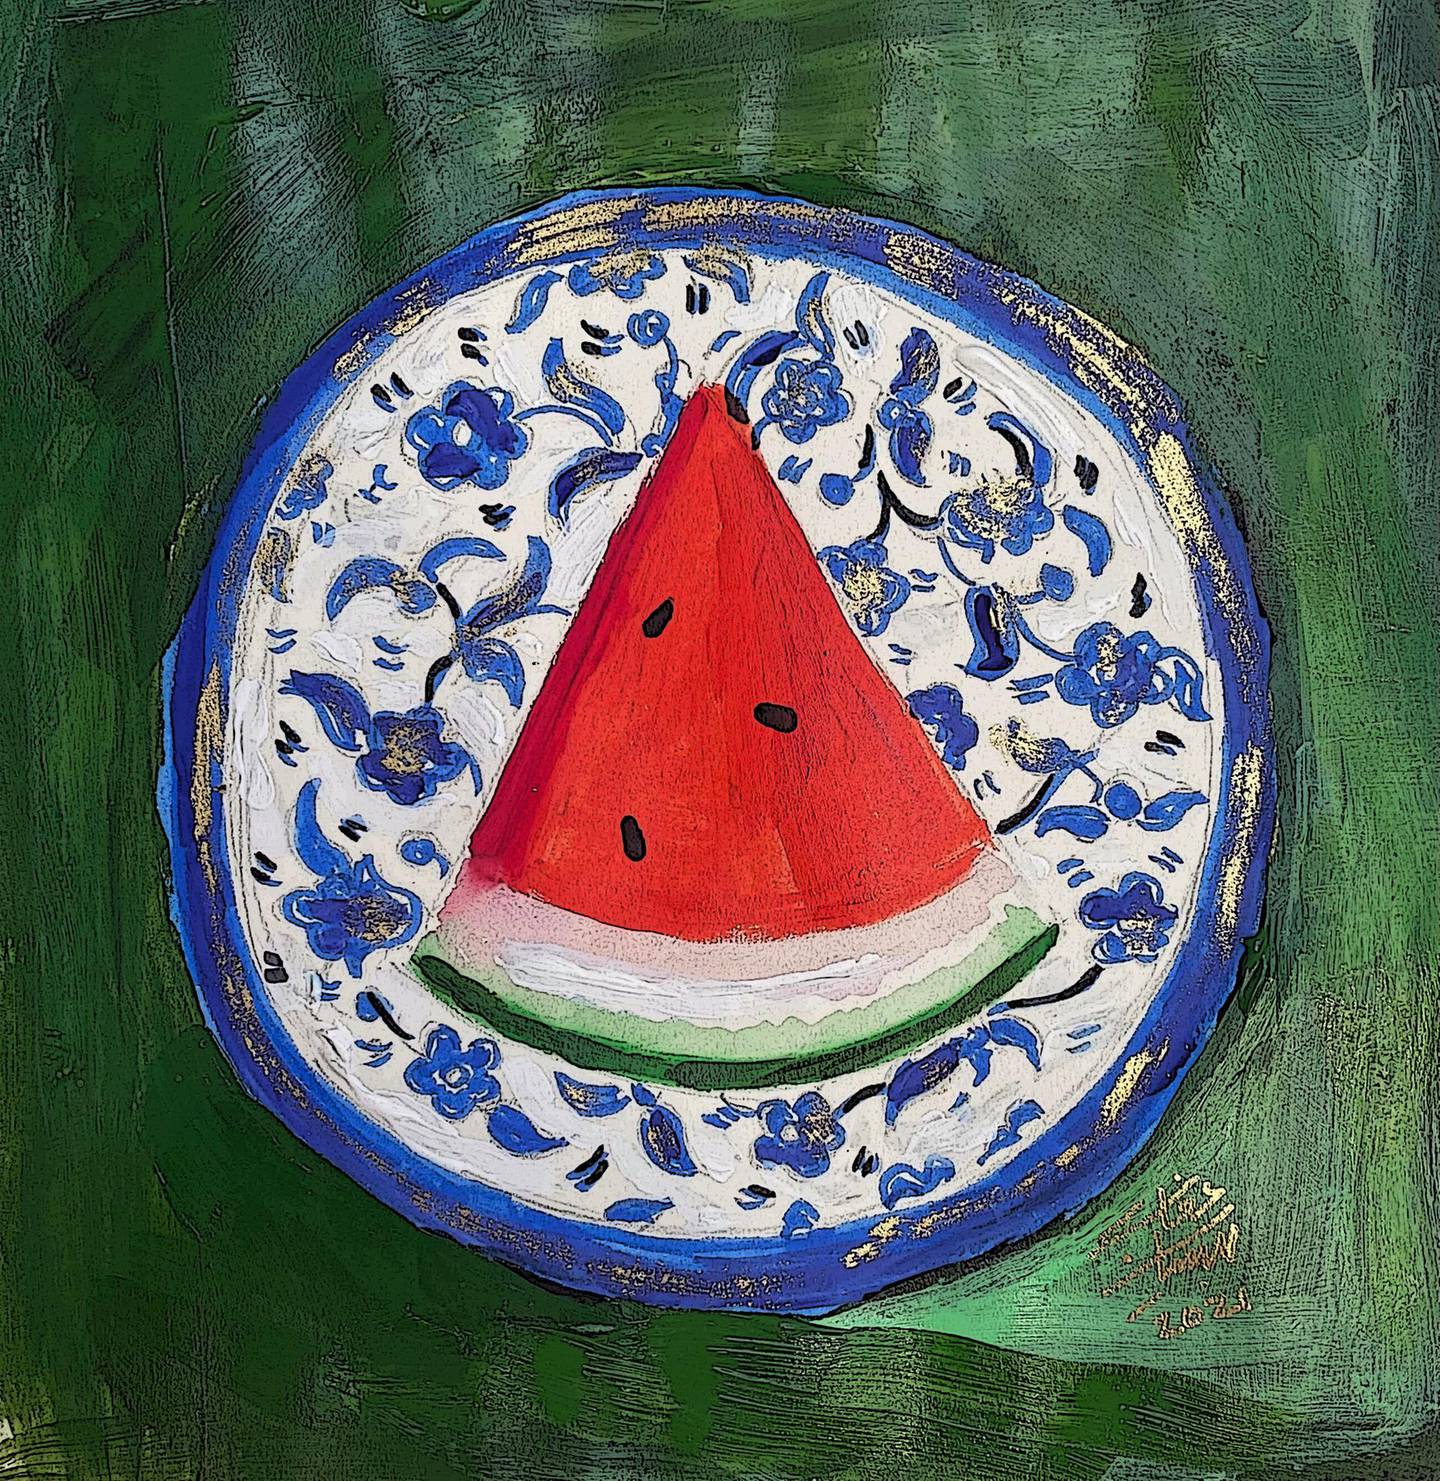 Beesan Arafat  (@beesanarafat on Instagram), Palestinian-Jordanian artist in England, depicts a slice of watermelon on a Hebron plate. Courtesy the artist